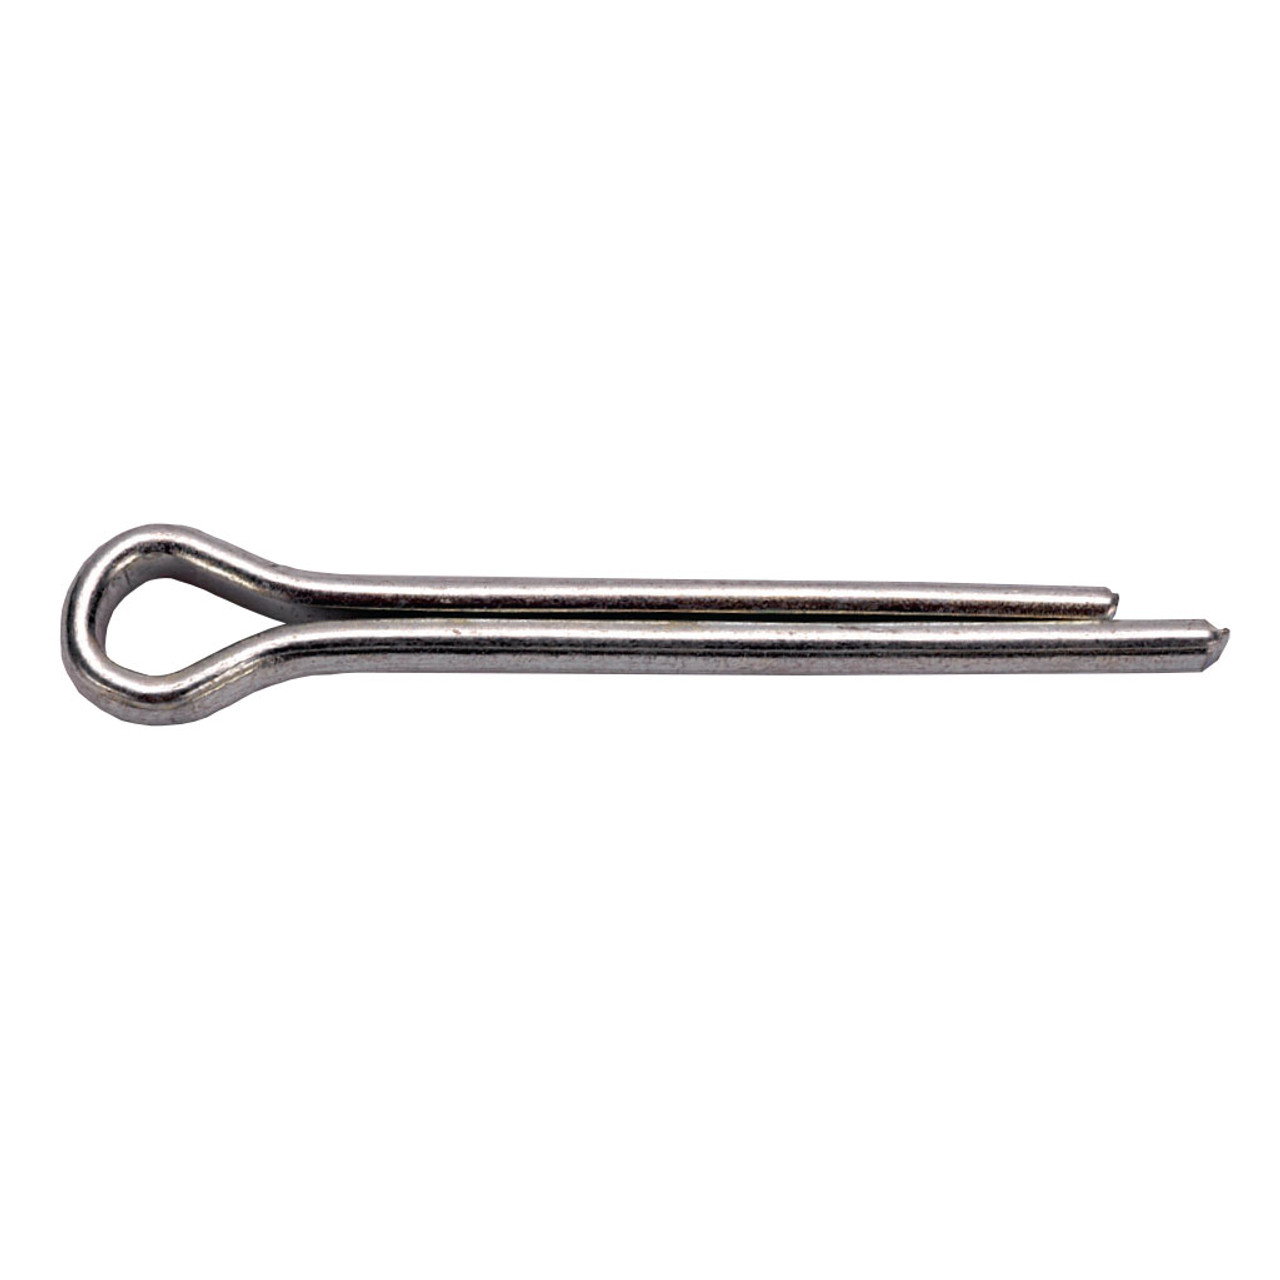 1/2 x 2 Cotter Pin Pin, Zinc Plated - Hi-Line Inc.